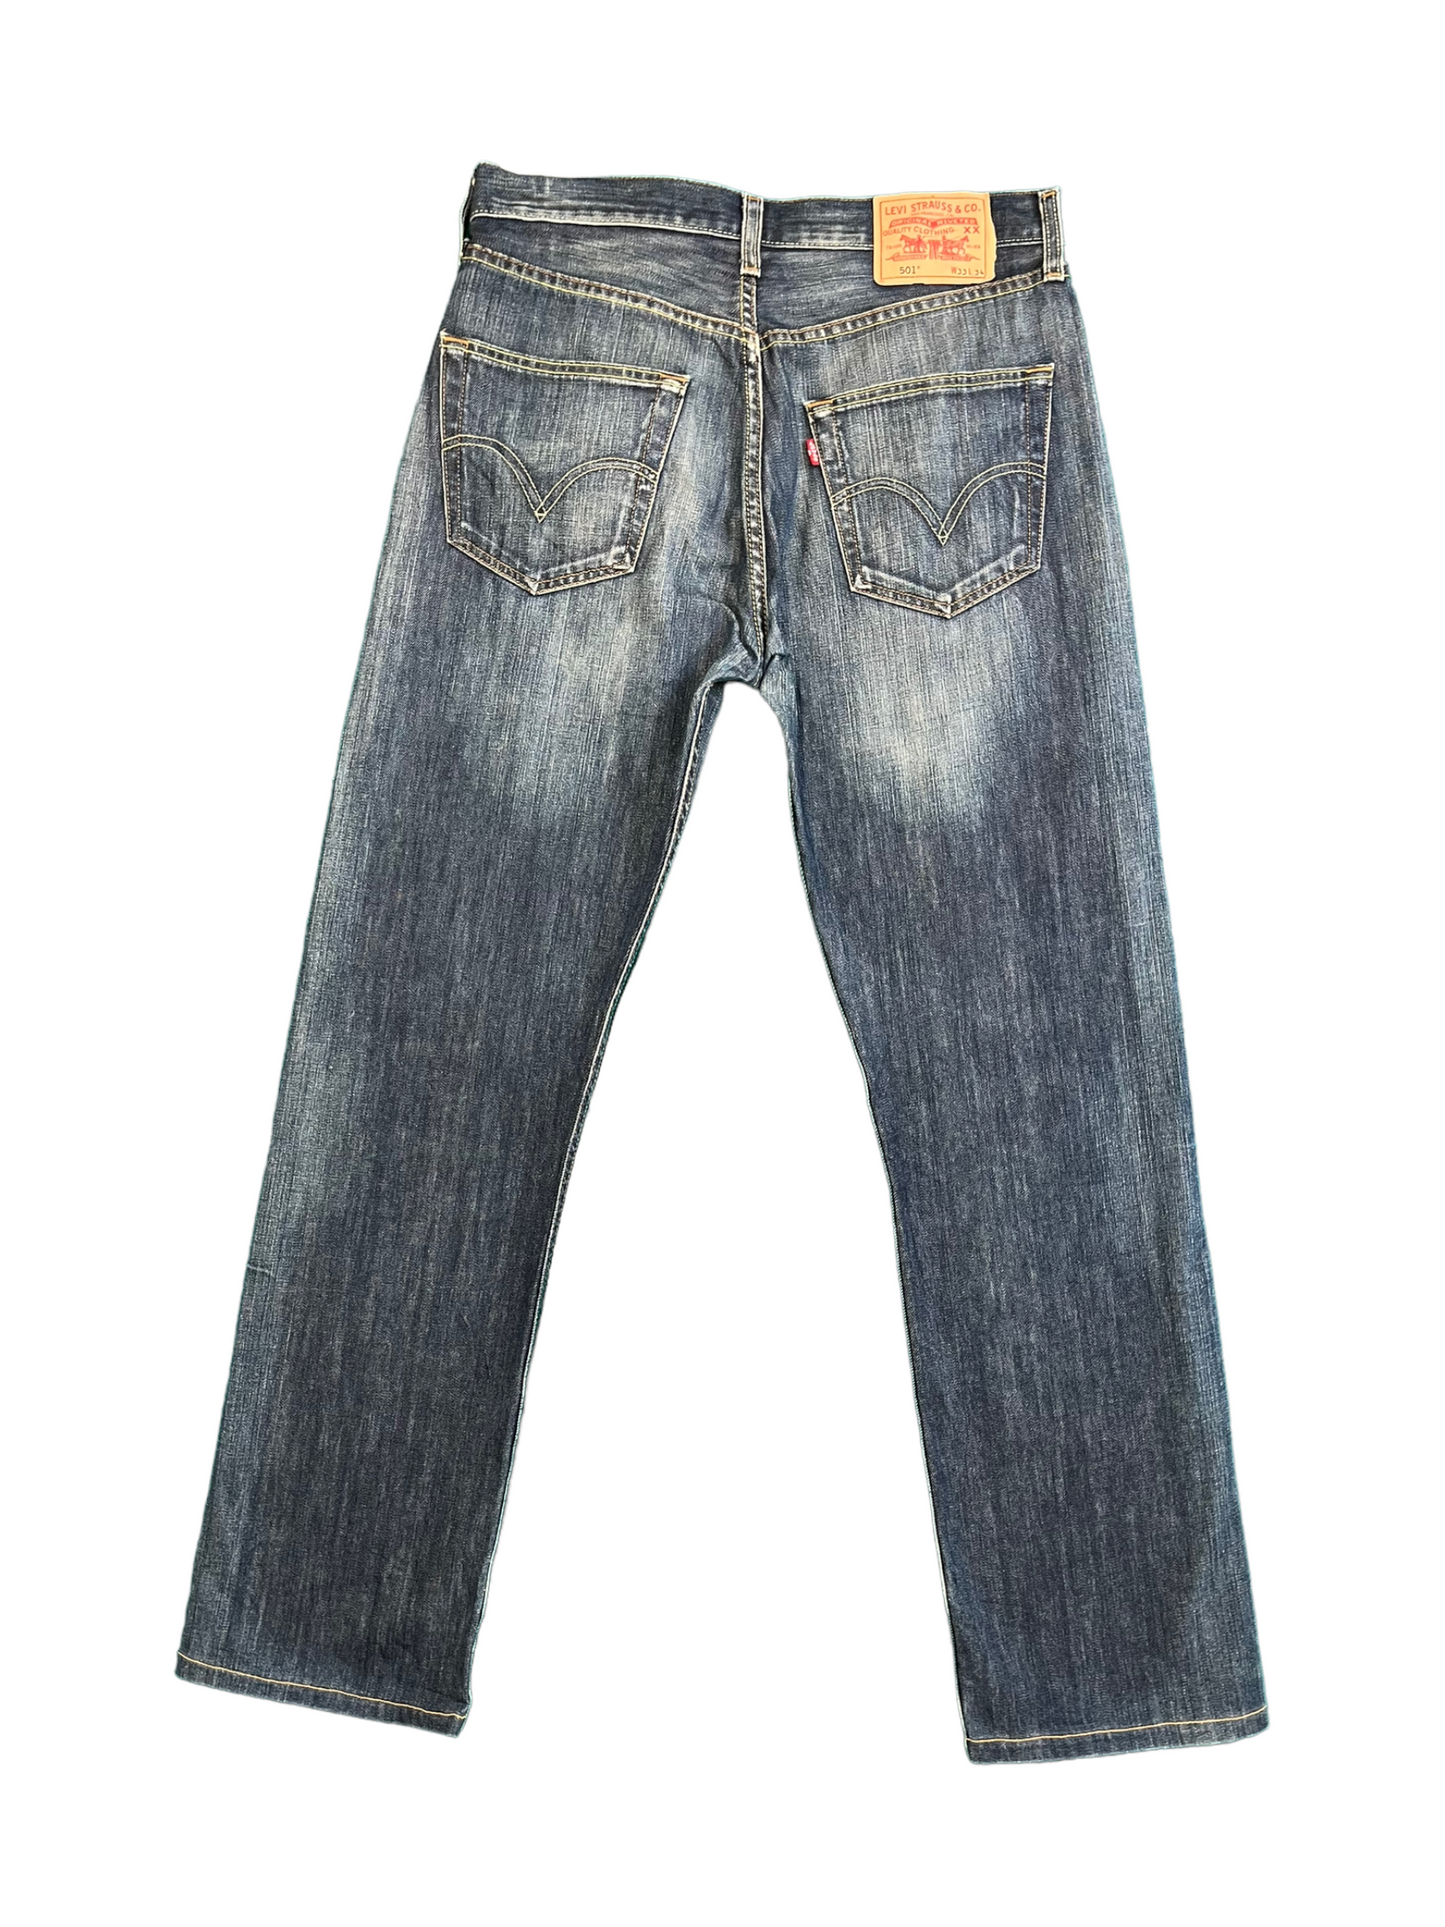 Mens Vintage Levi Straight Leg Jeans - Waist 33" Length 34"